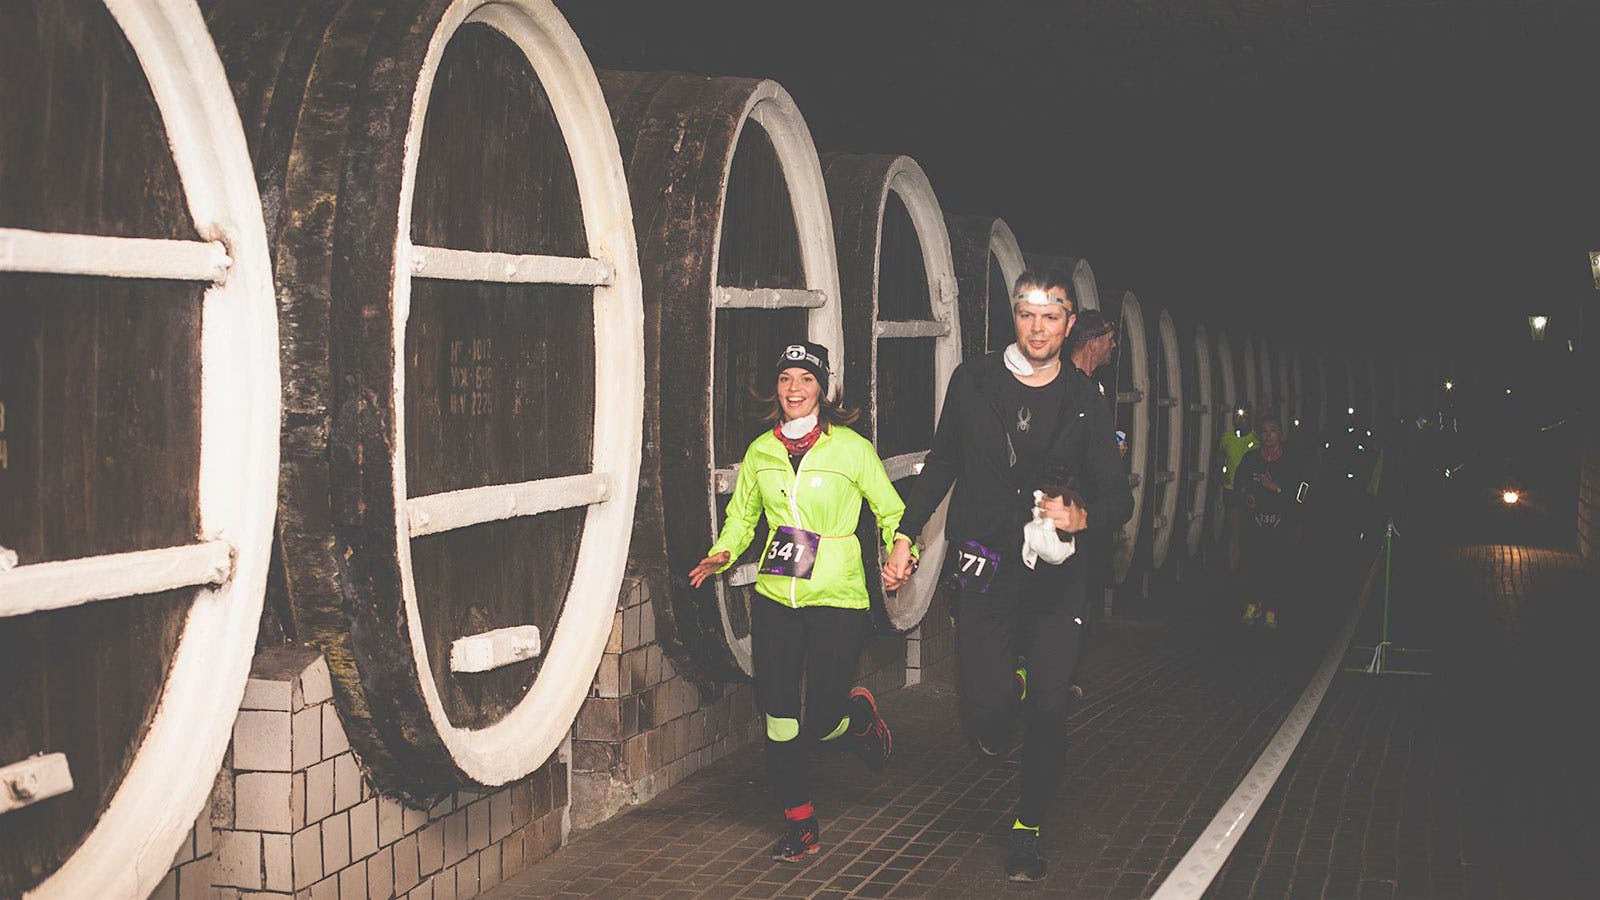 Runners in the Moldovan cellars